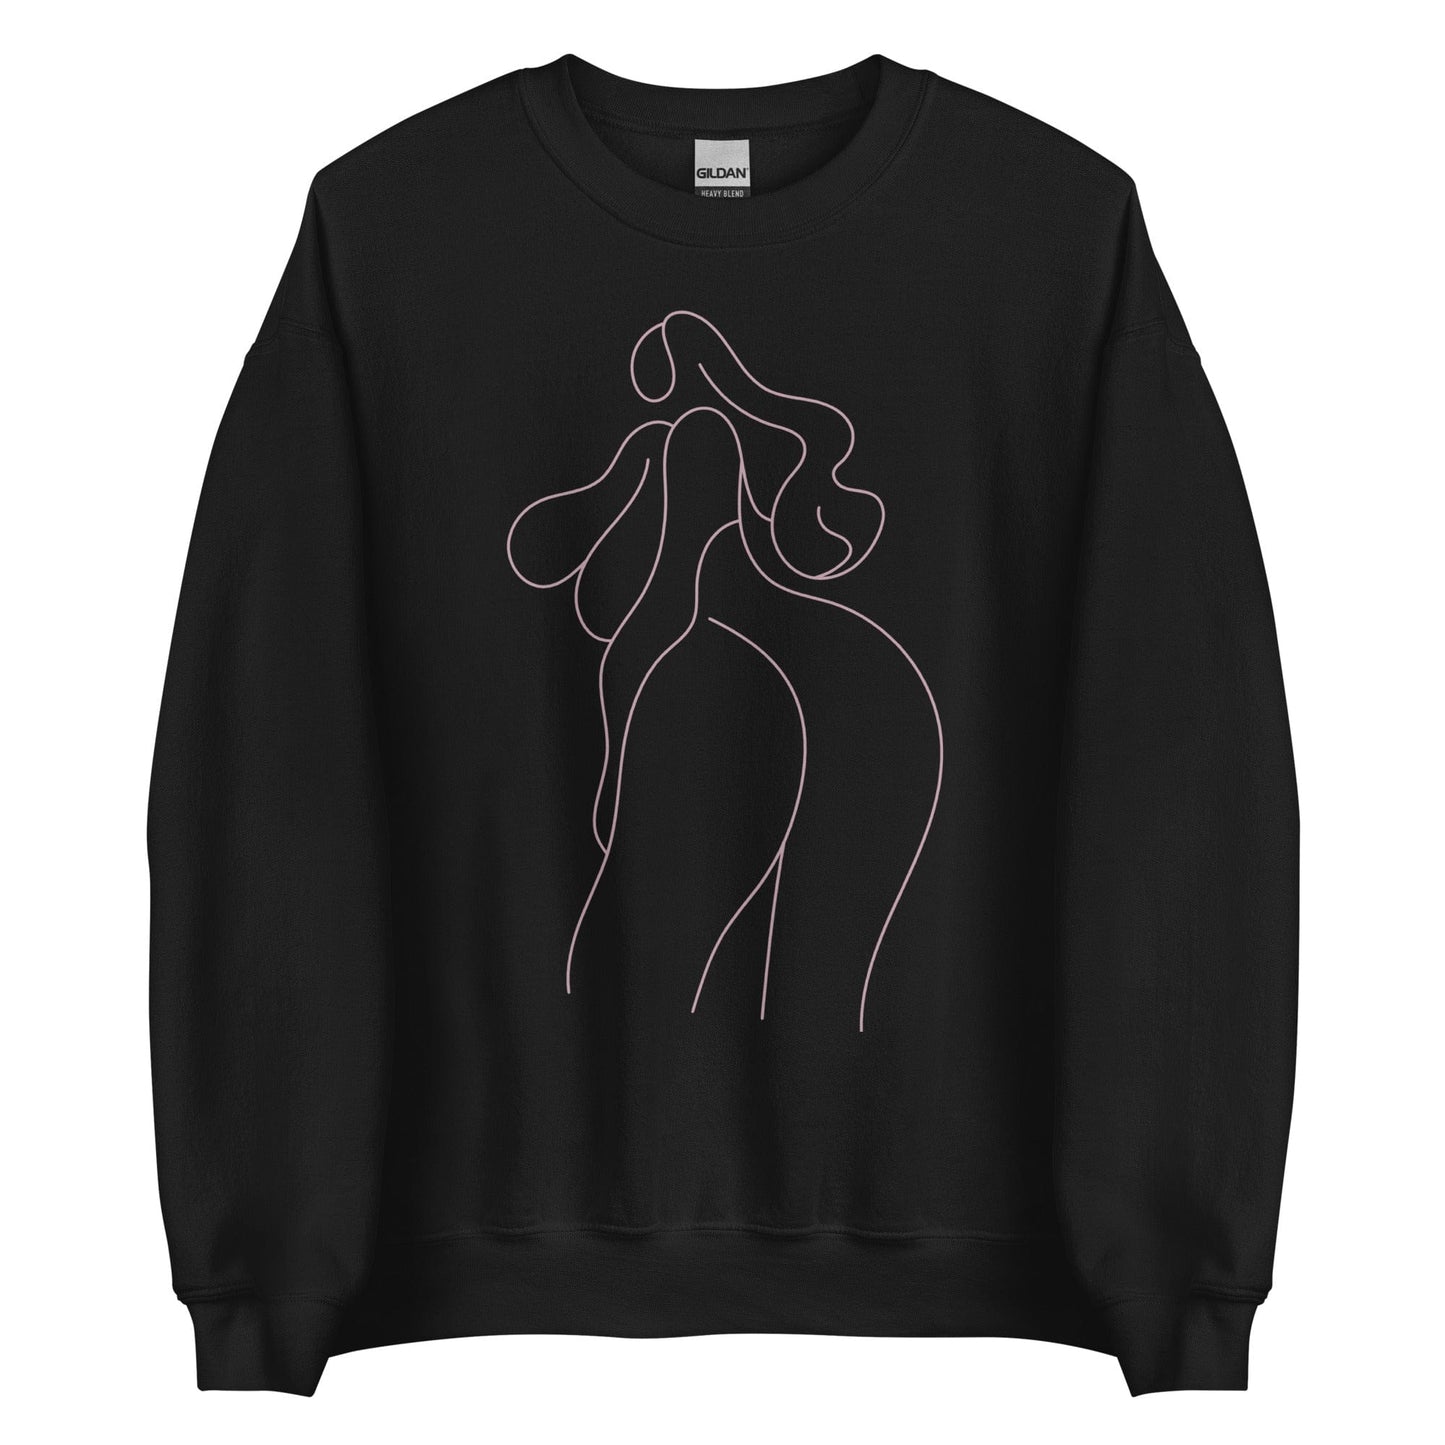 drawing-female-body-sweatshirt-apparel-at-feminist-define-black-front